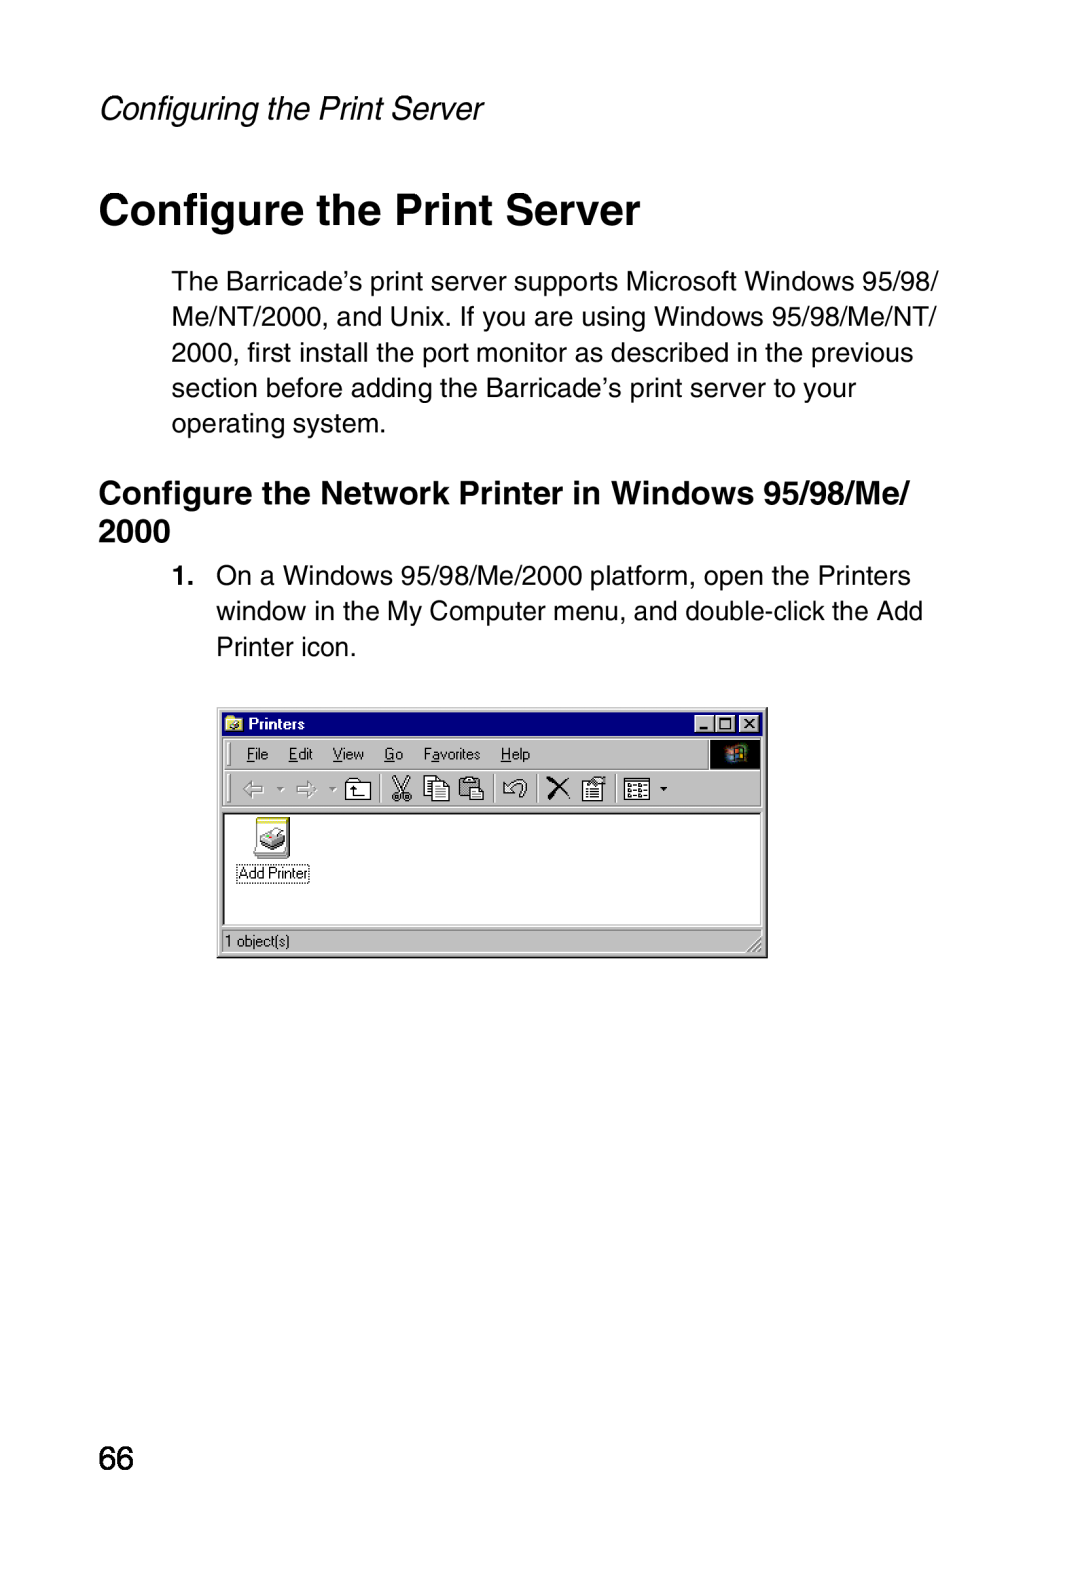 Sharp SMC7004ABR, S M C 7 0 0 4 A B R manual Configure the Print Server, Configure the Network Printer in Windows 95/98/Me 